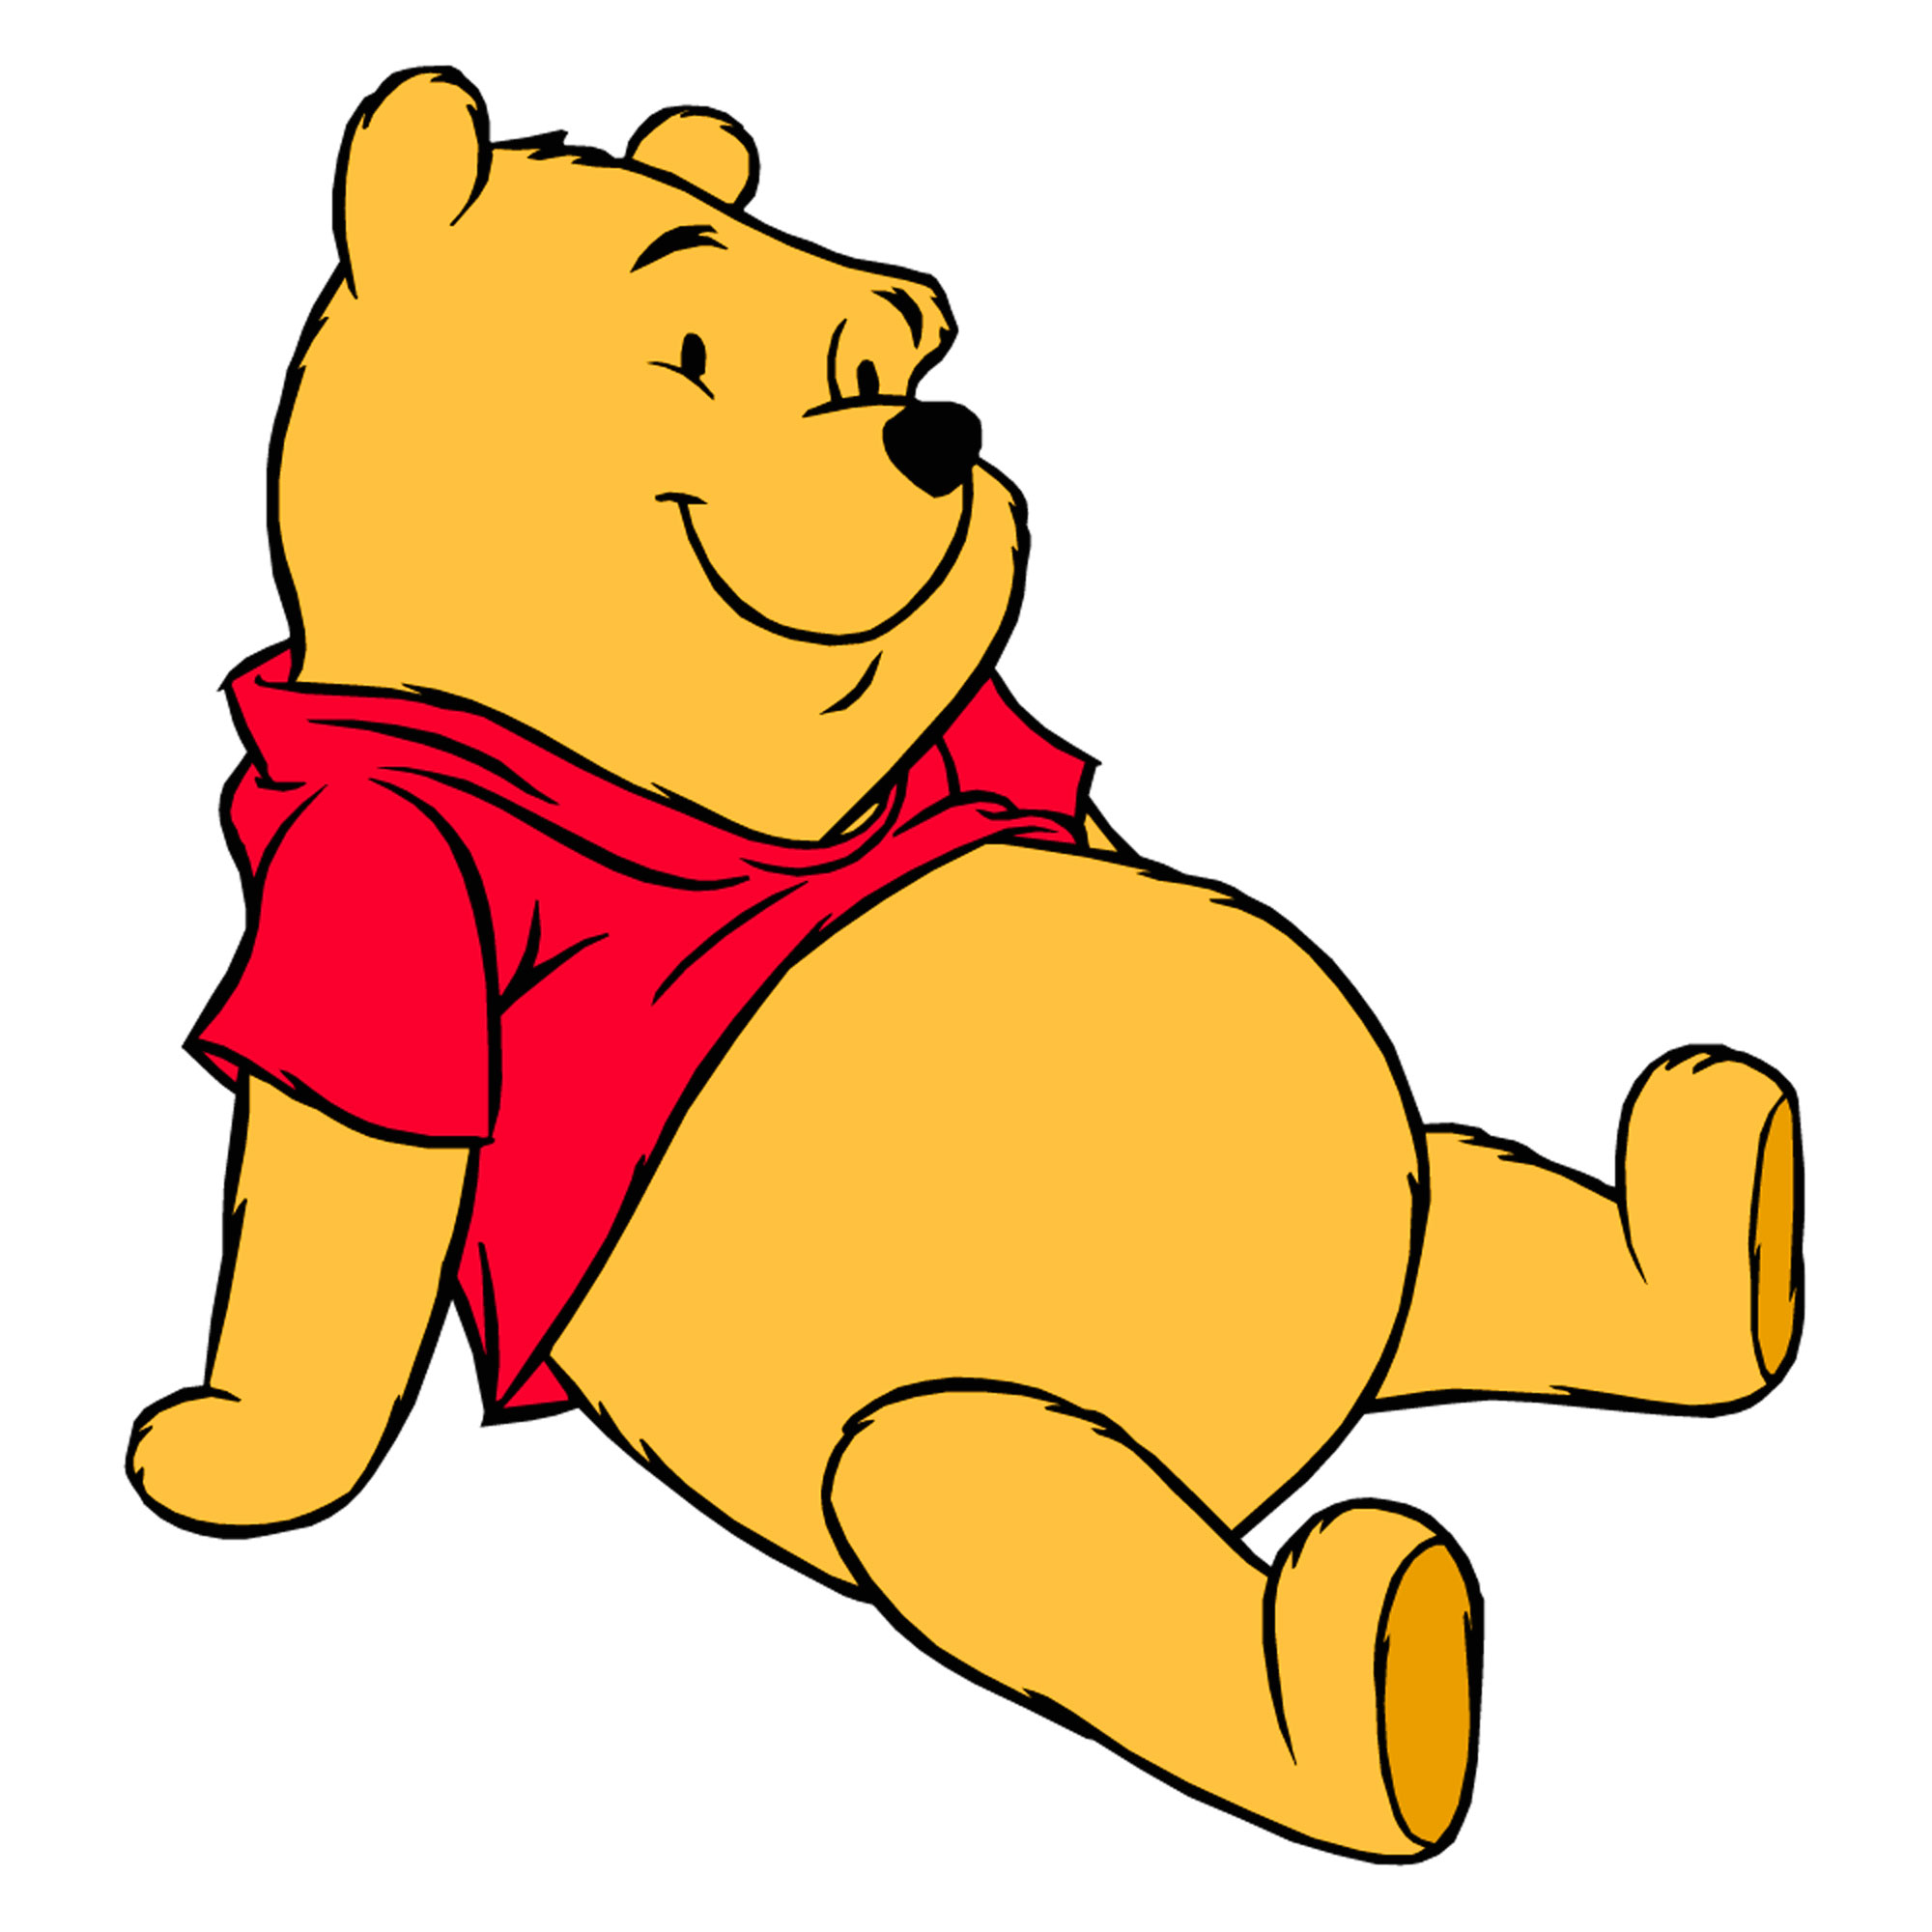 Winnie the Pooh Cartoon Image Wallpaper for Lumia - Cartoons ...